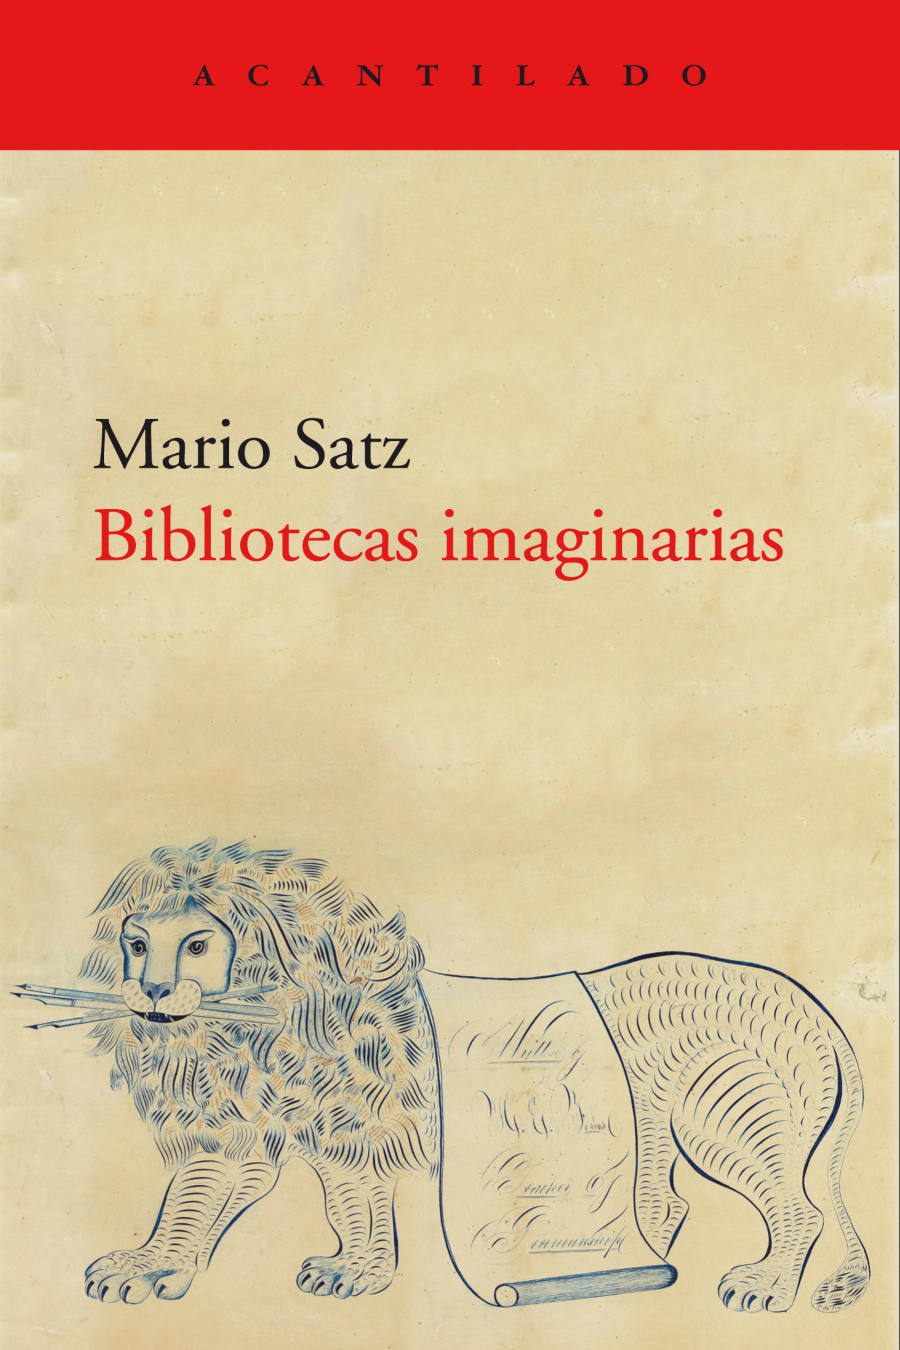 Mario Satz. Bibliotecas imaginarias.